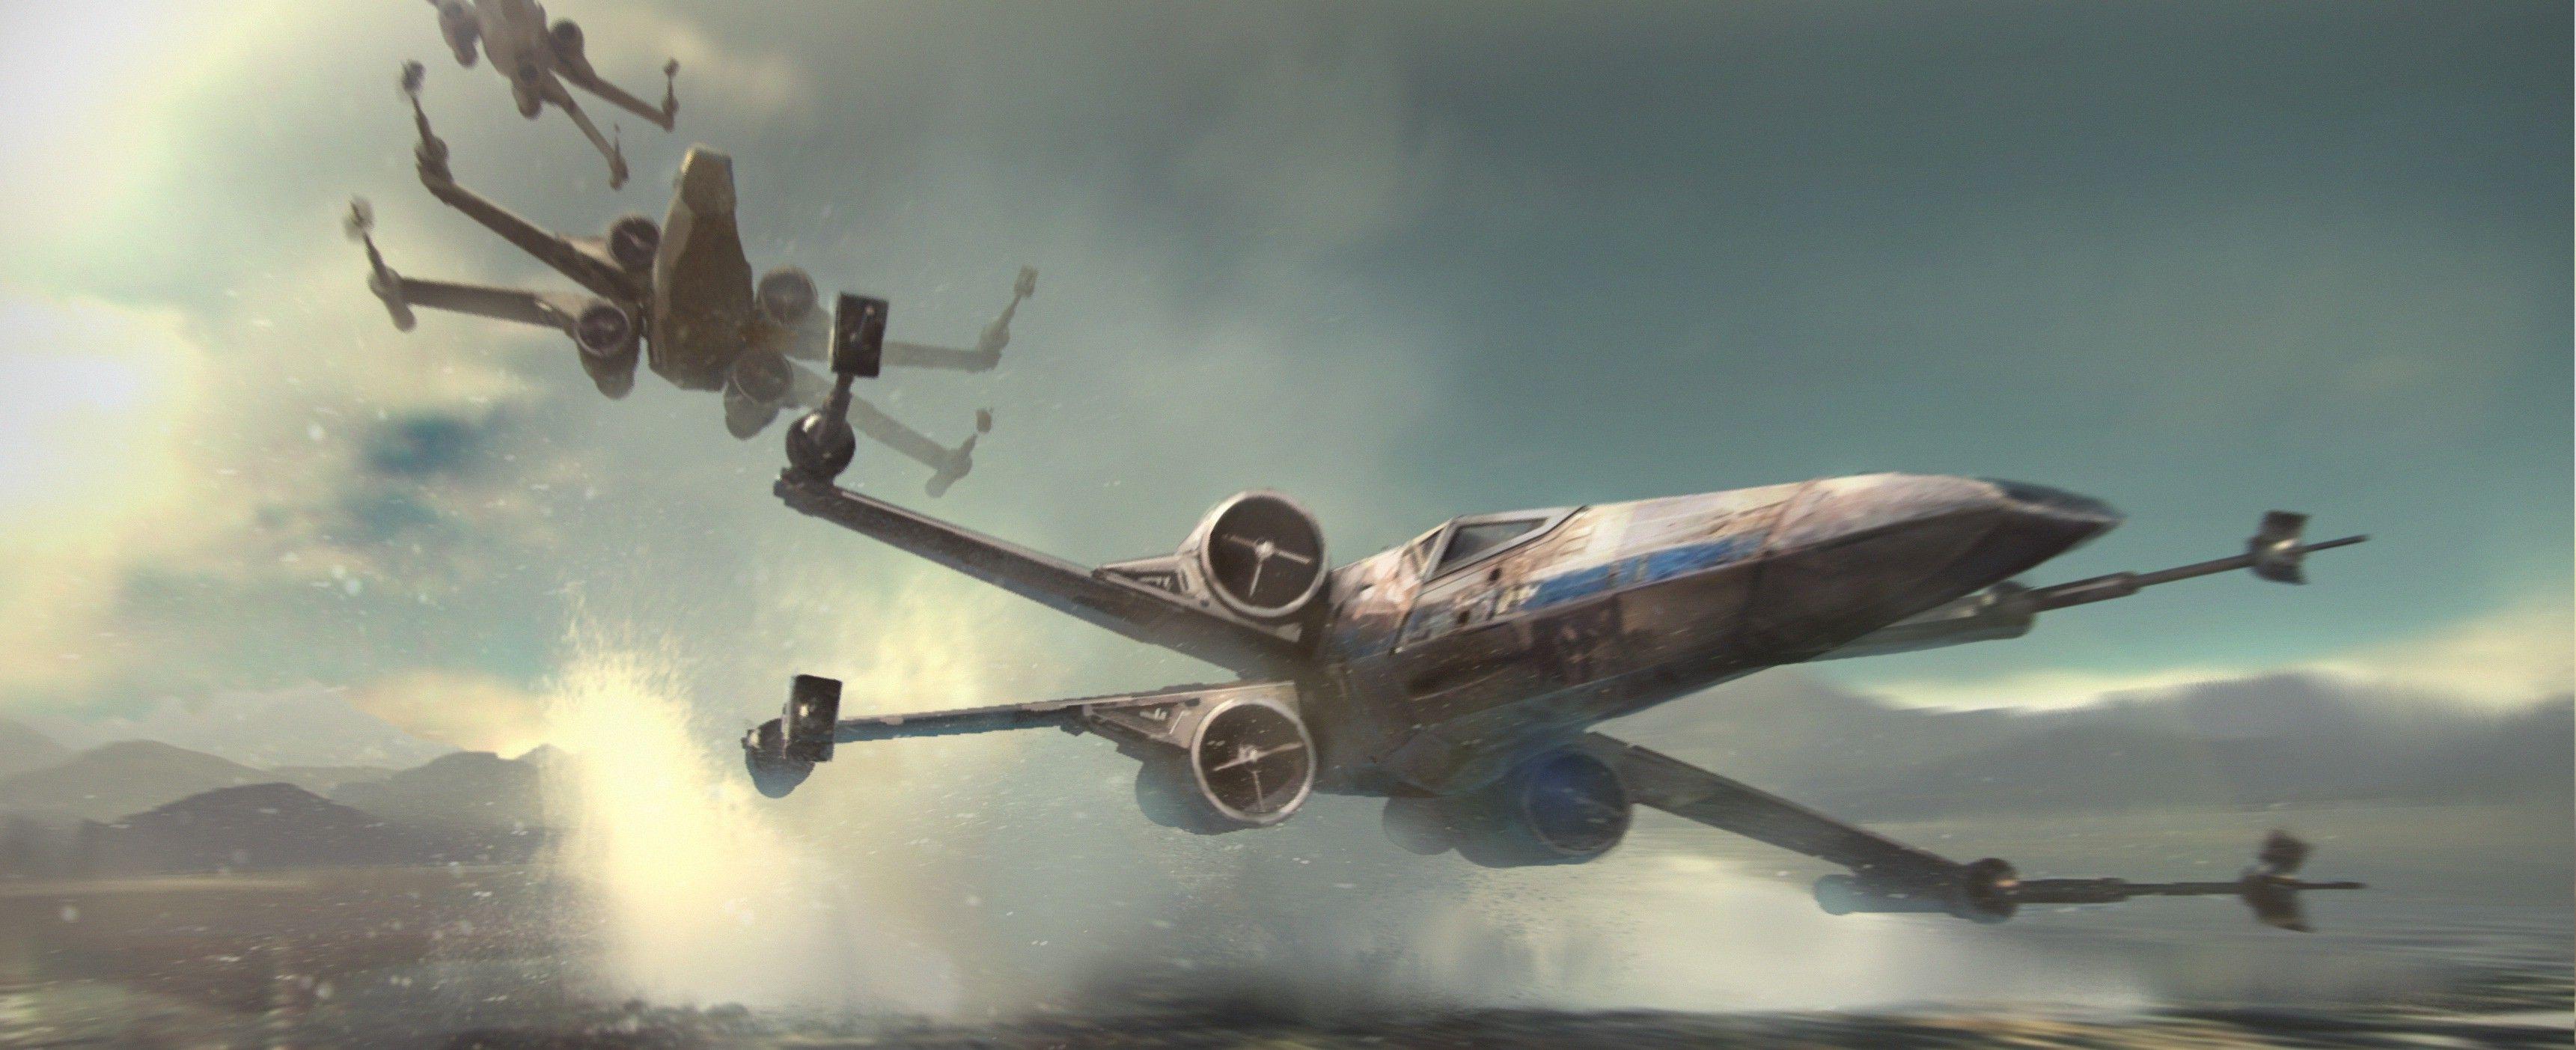 Star Wars XWing E Fighter Wallpaper. HD Wallpaper